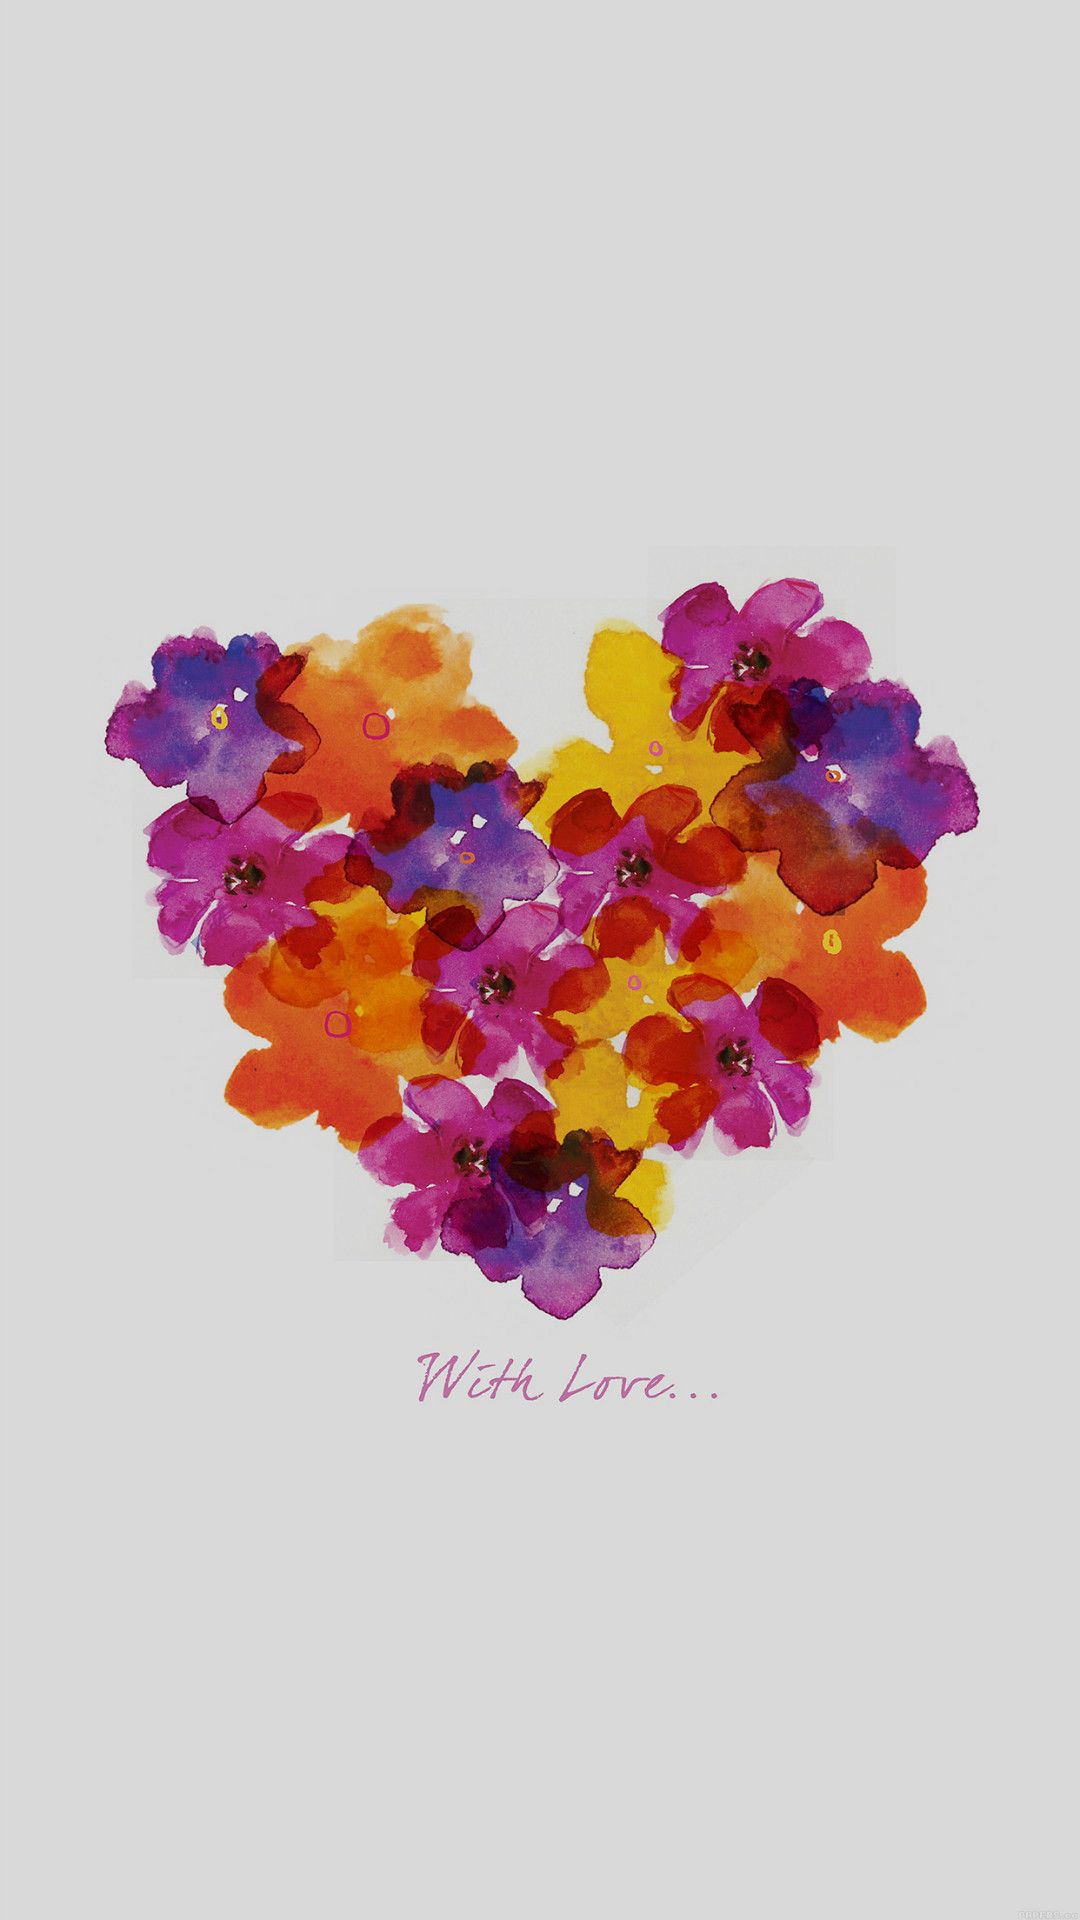 Illust Nicola Evans Flower Love iPhone 8 Wallpaper Free Download